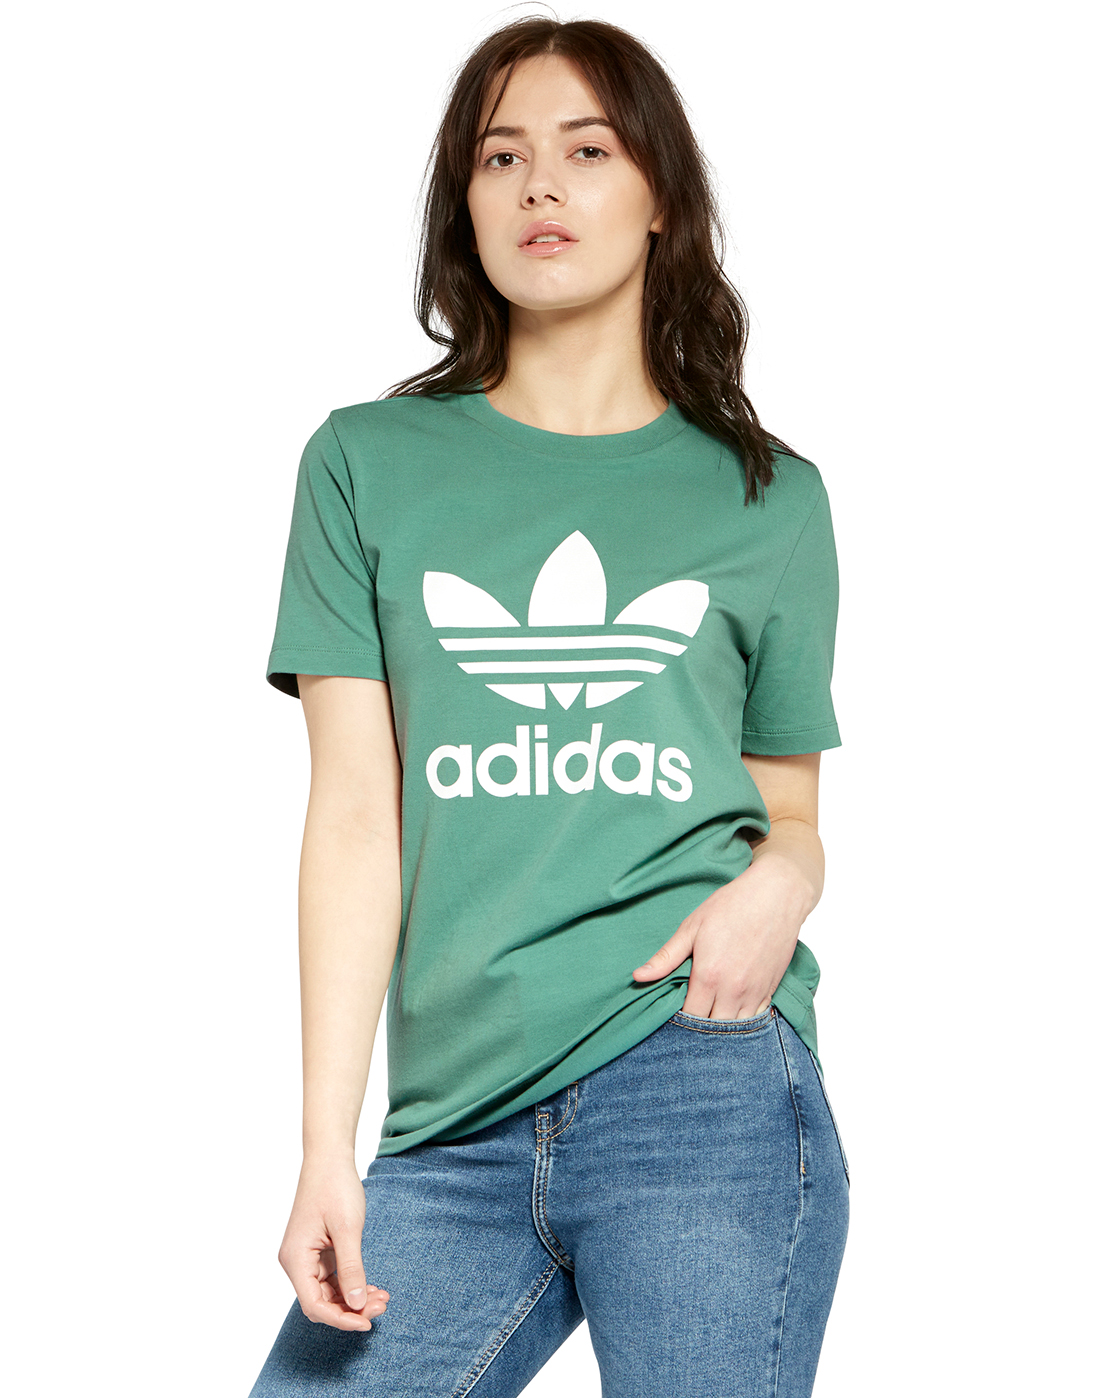 adidas Originals Womens Trefoil T-Shirt - Green | Life Style Sports IE